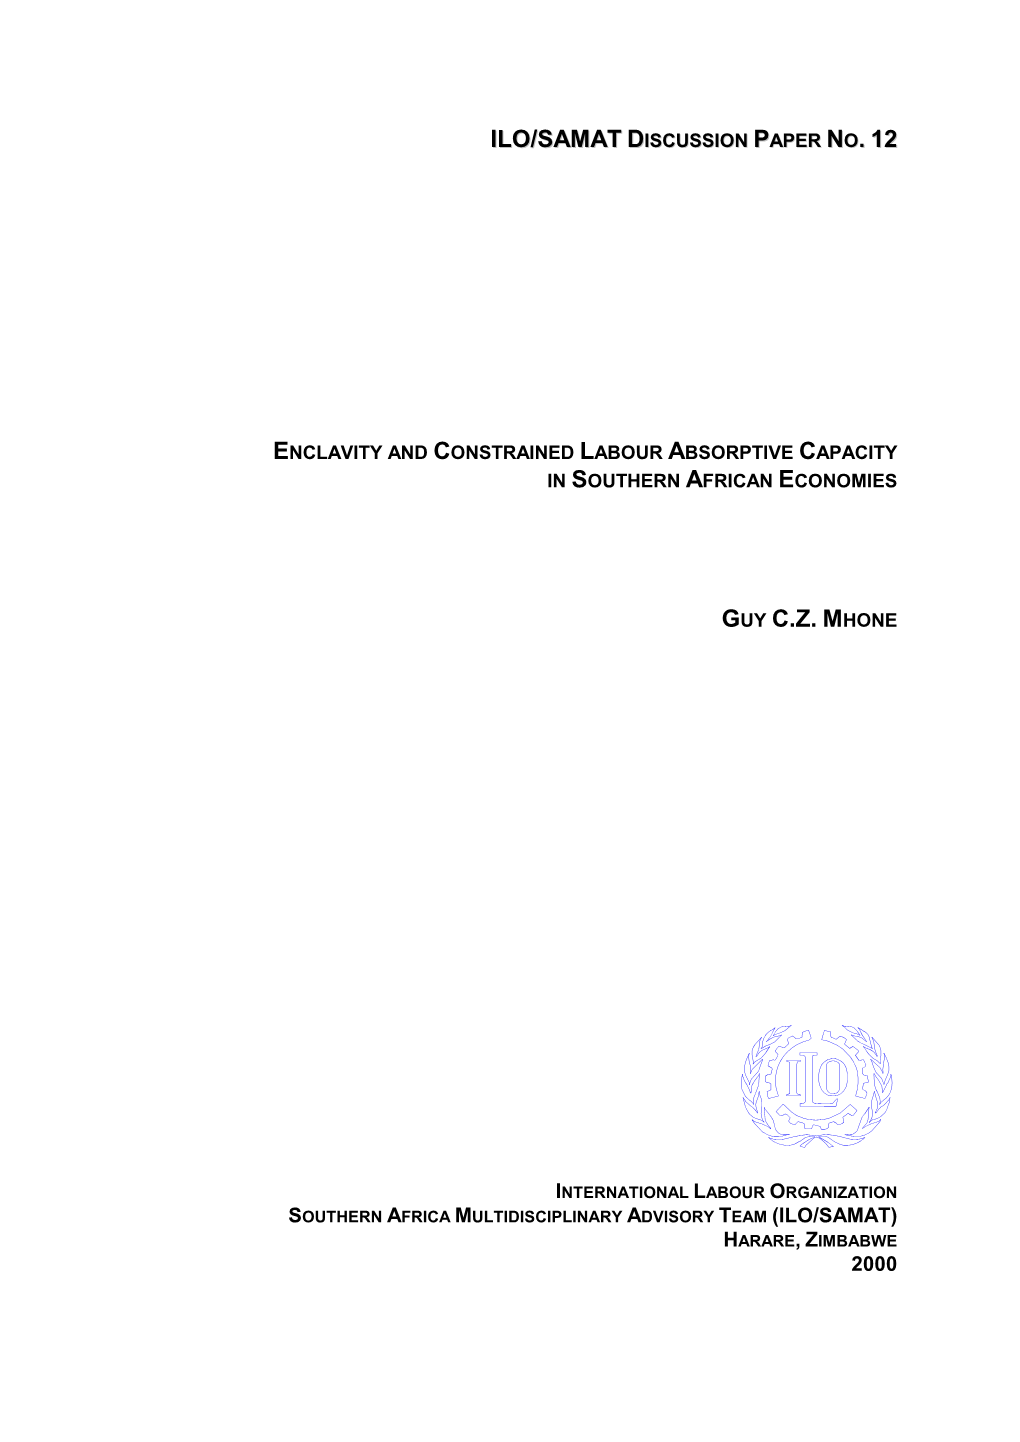 Ilo/Samat Discussion Paper No. 12 Enclavity and Constrained Labour